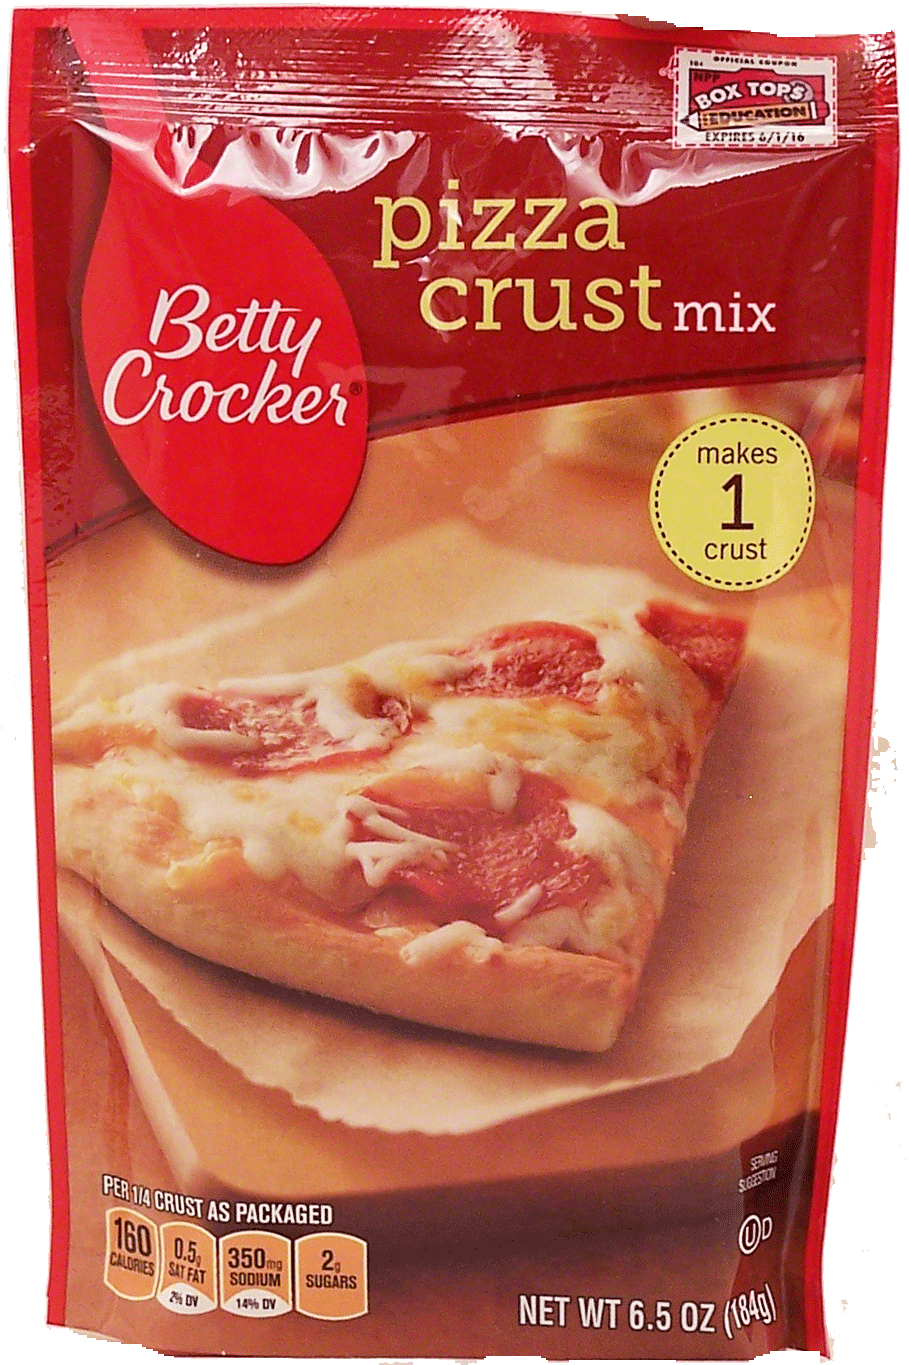 Betty Crocker Pizza Crust Mix pizza crust mix Full-Size Picture